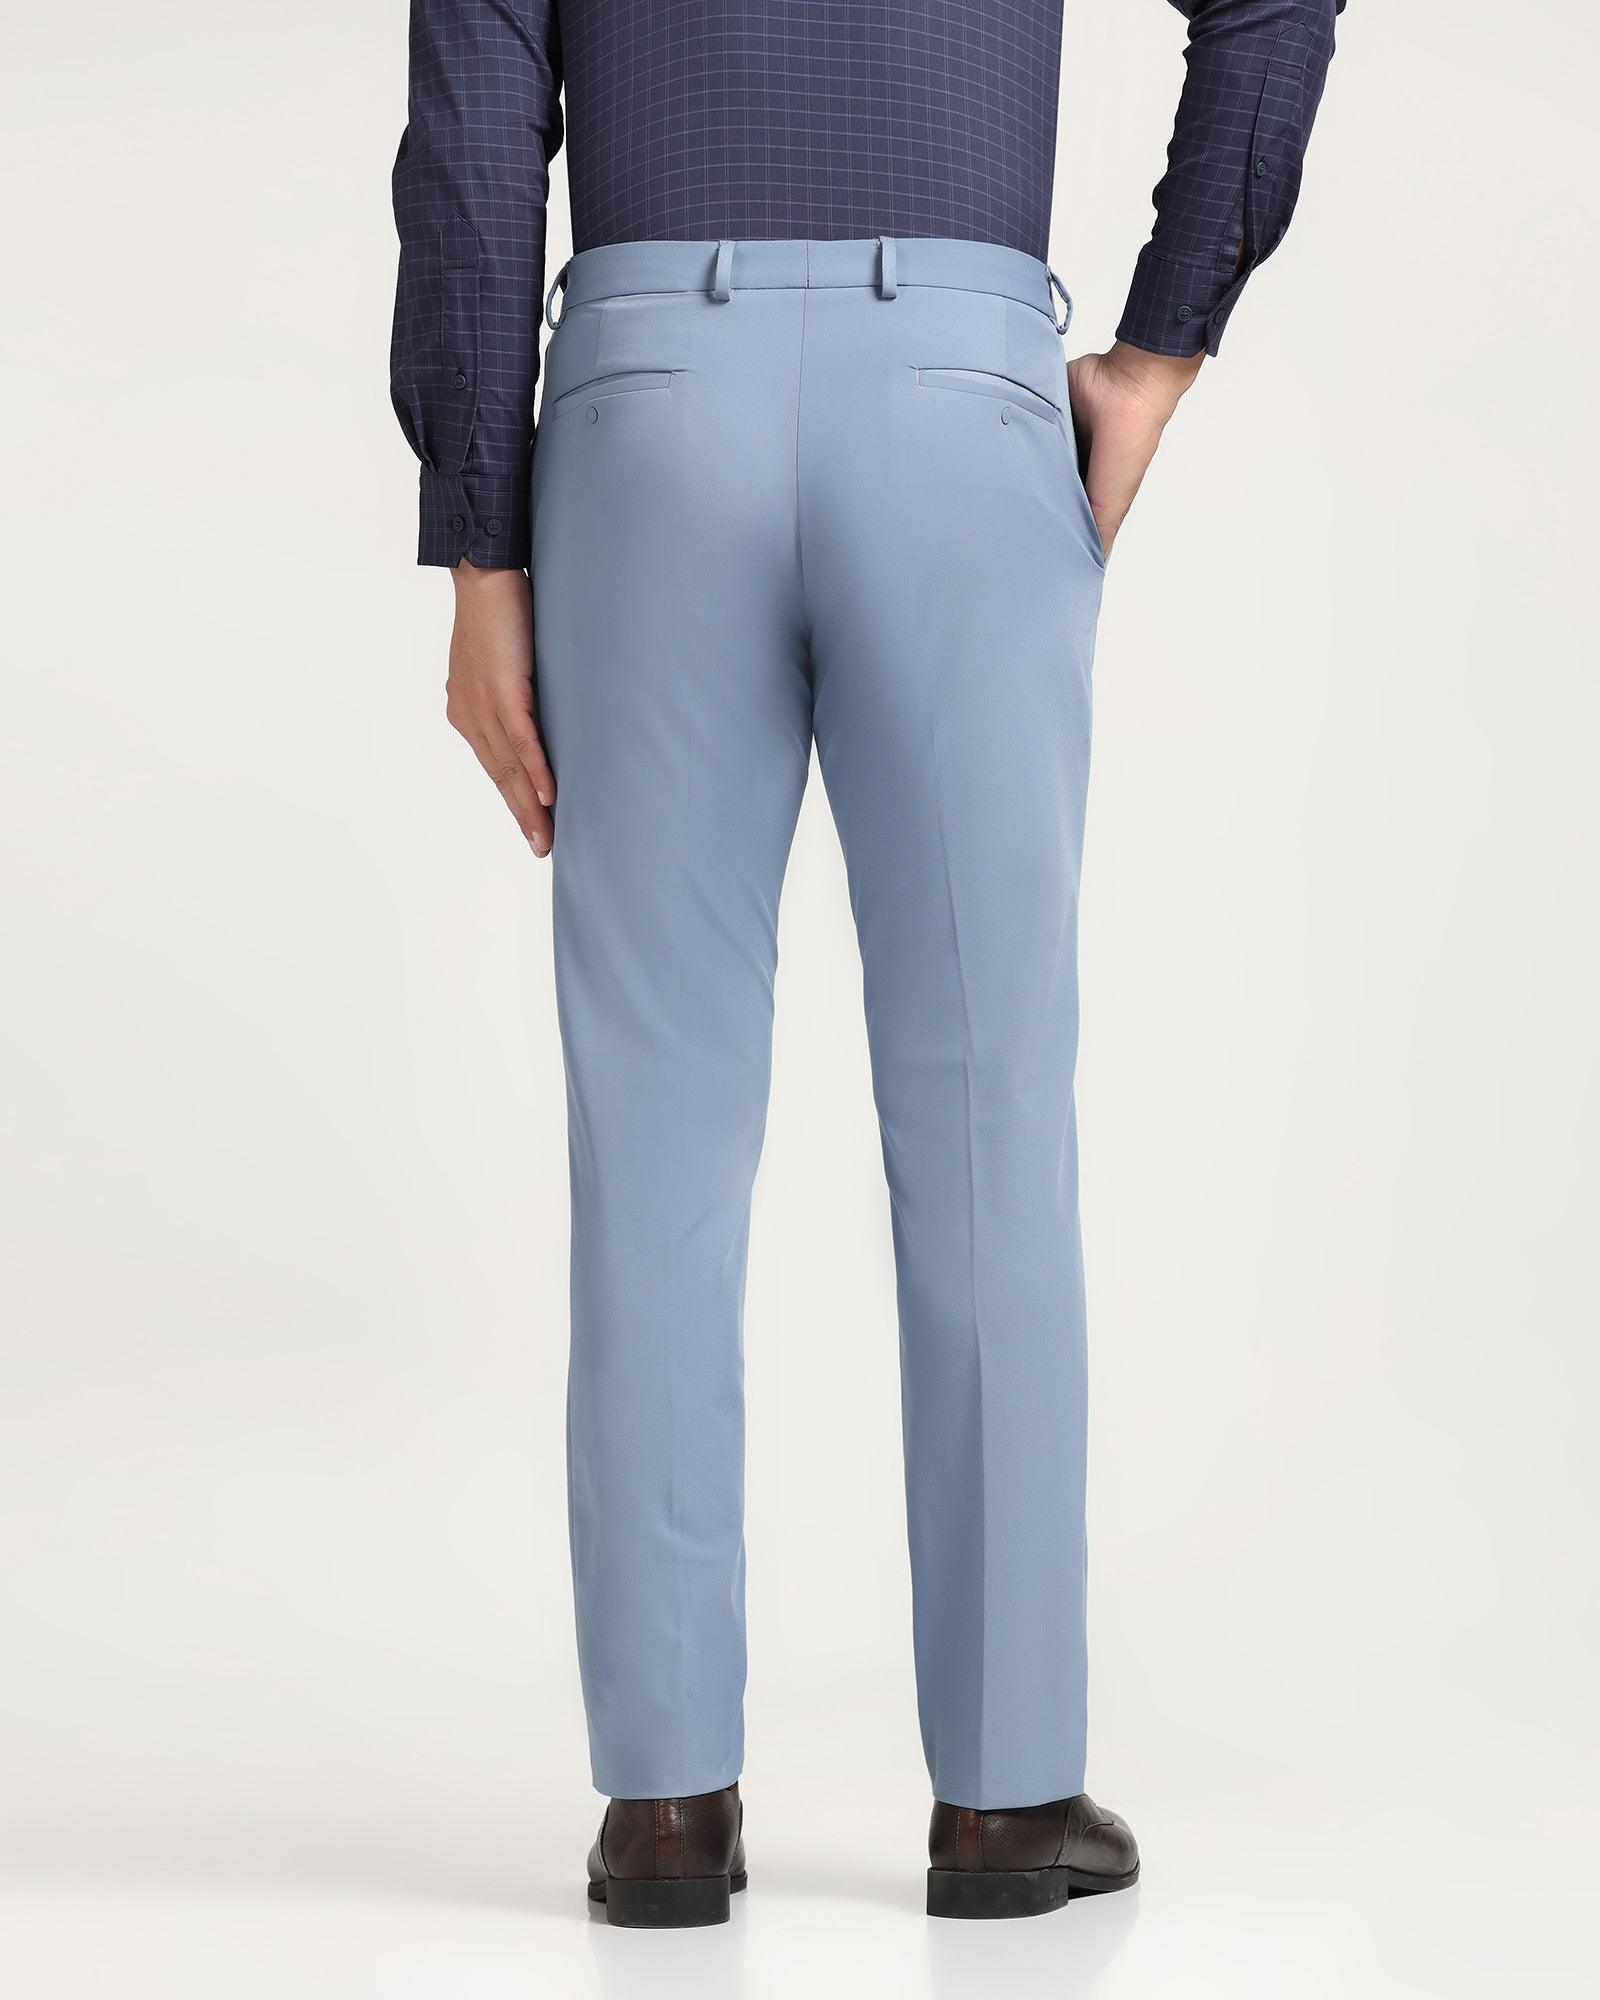 Dwellfab Regular Fit Men Light Blue Trousers - Buy Dwellfab Regular Fit Men Light  Blue Trousers Online at Best Prices in India | Flipkart.com